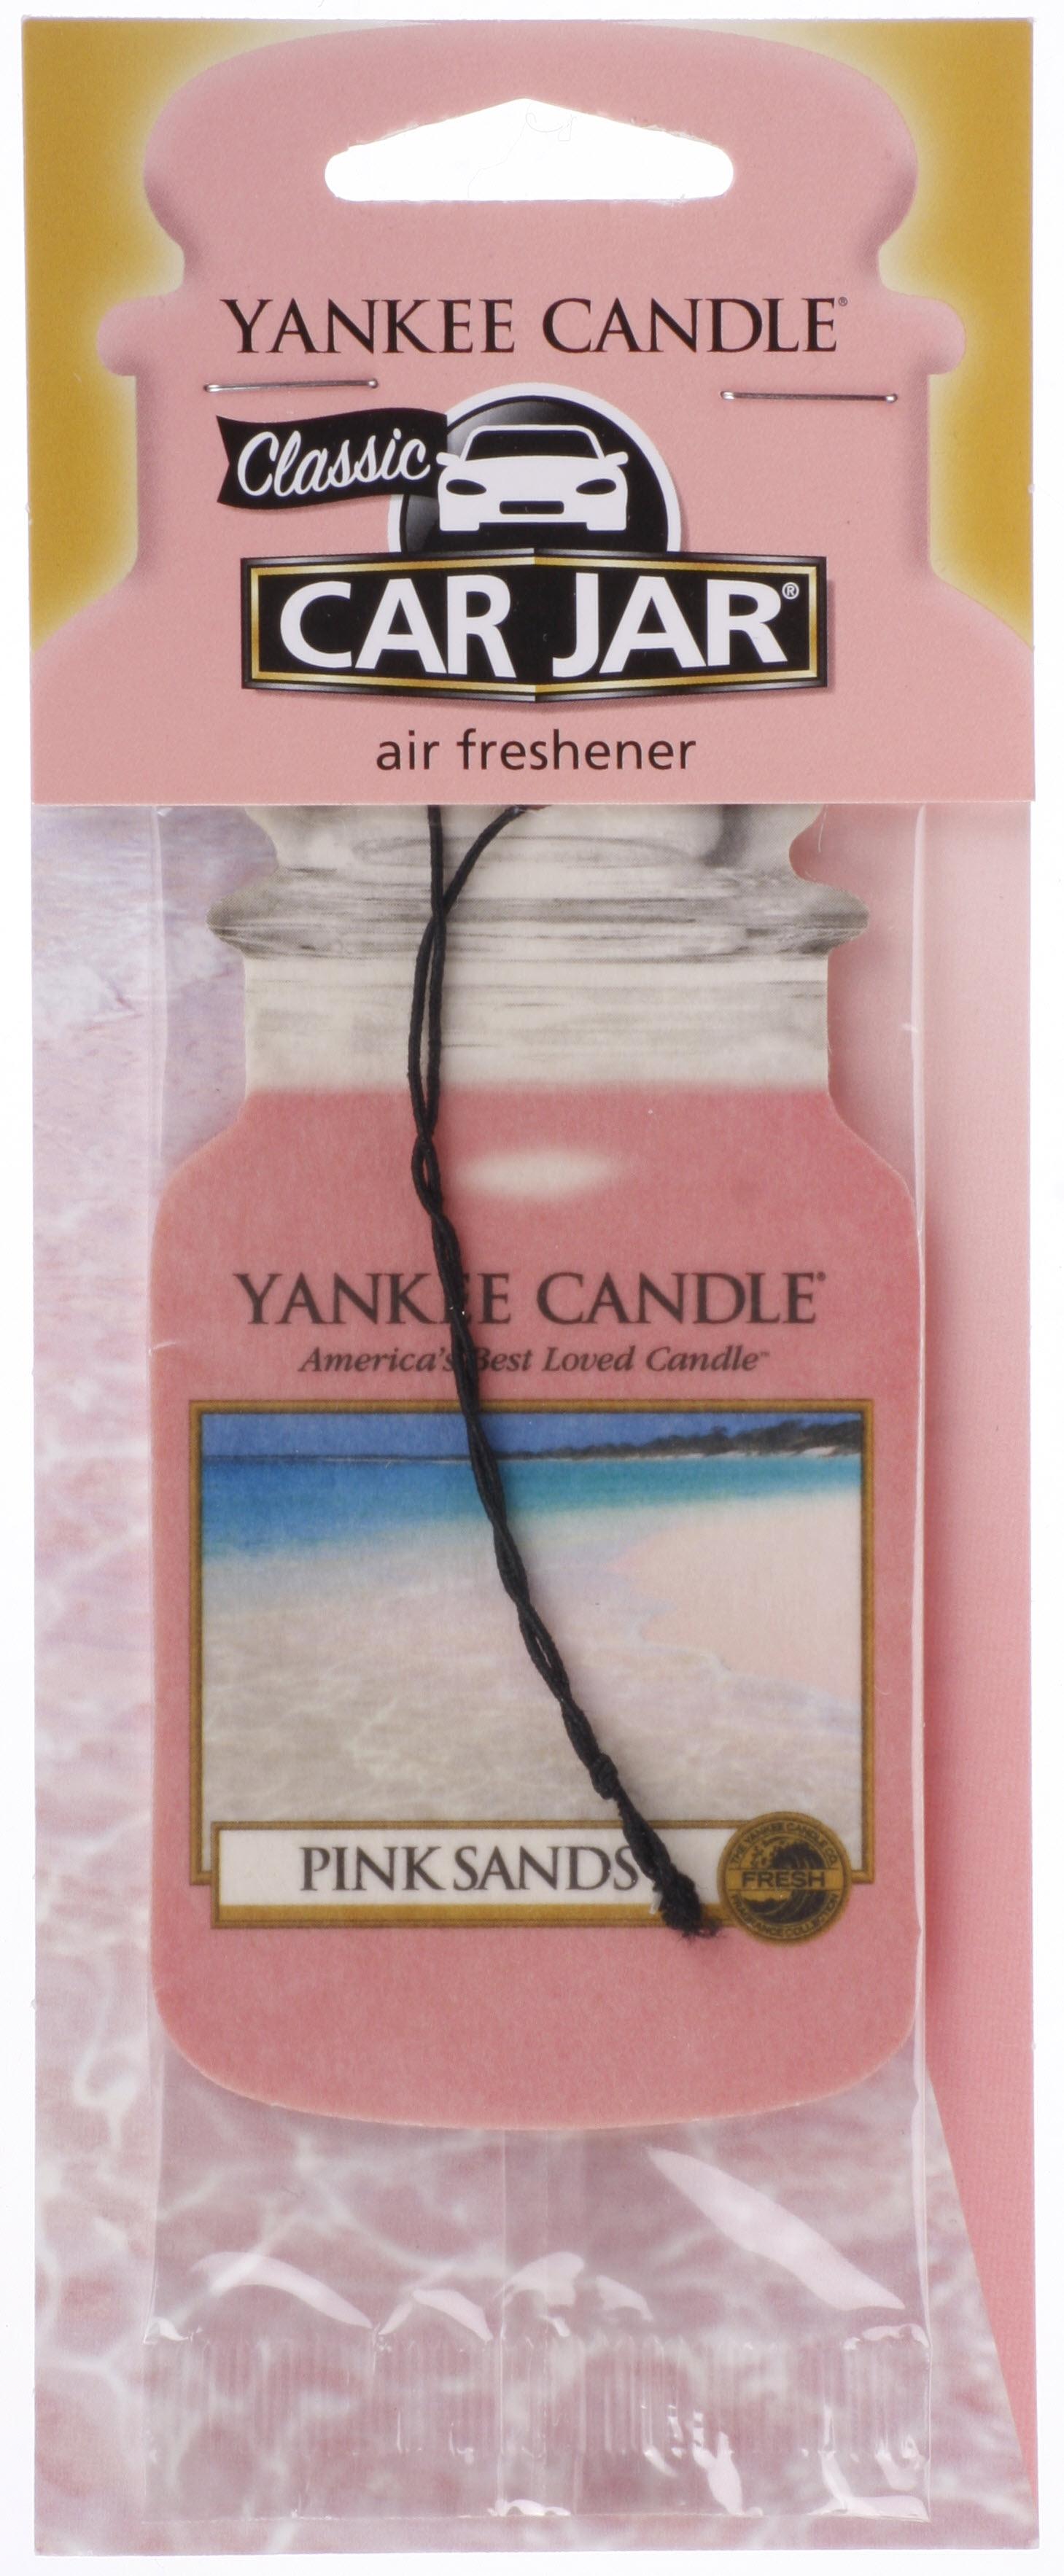 Yankee Candle Car Jar Air Freshener In Pink Sands